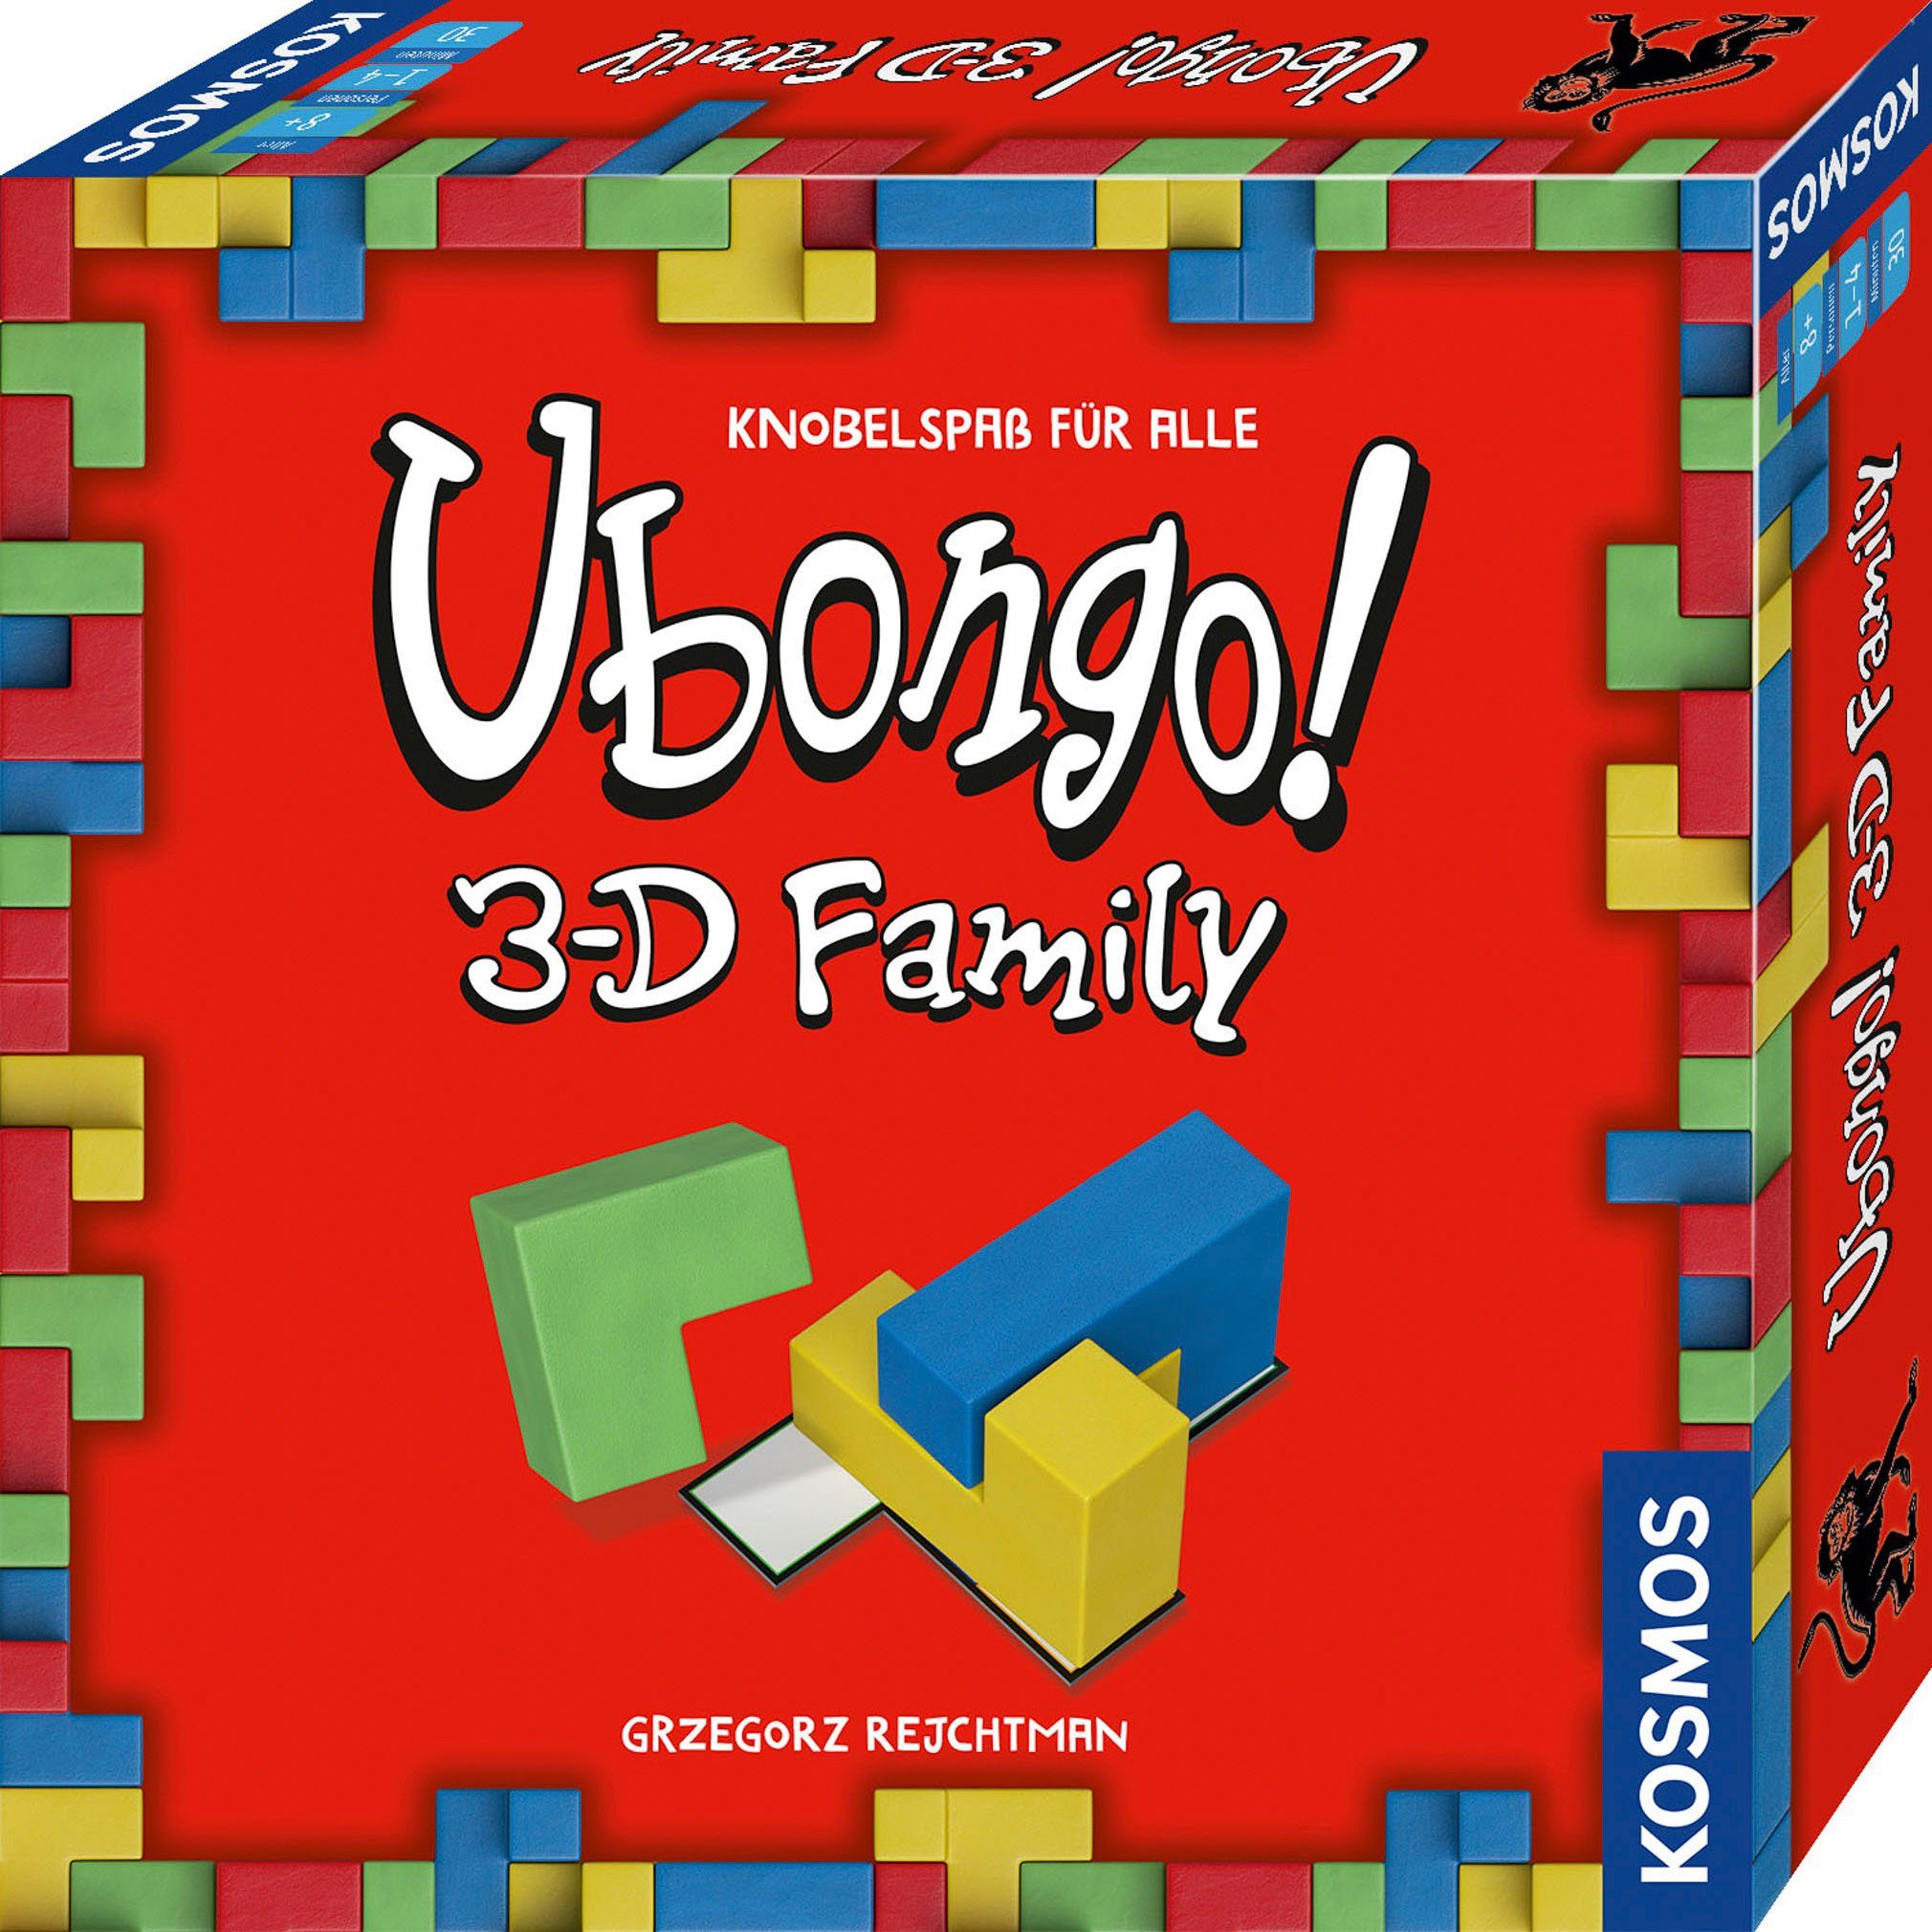 Kosmos Spiel, Knobelspiel Ubongo! 3-D Family 2022, Made in Germany | Legespiele